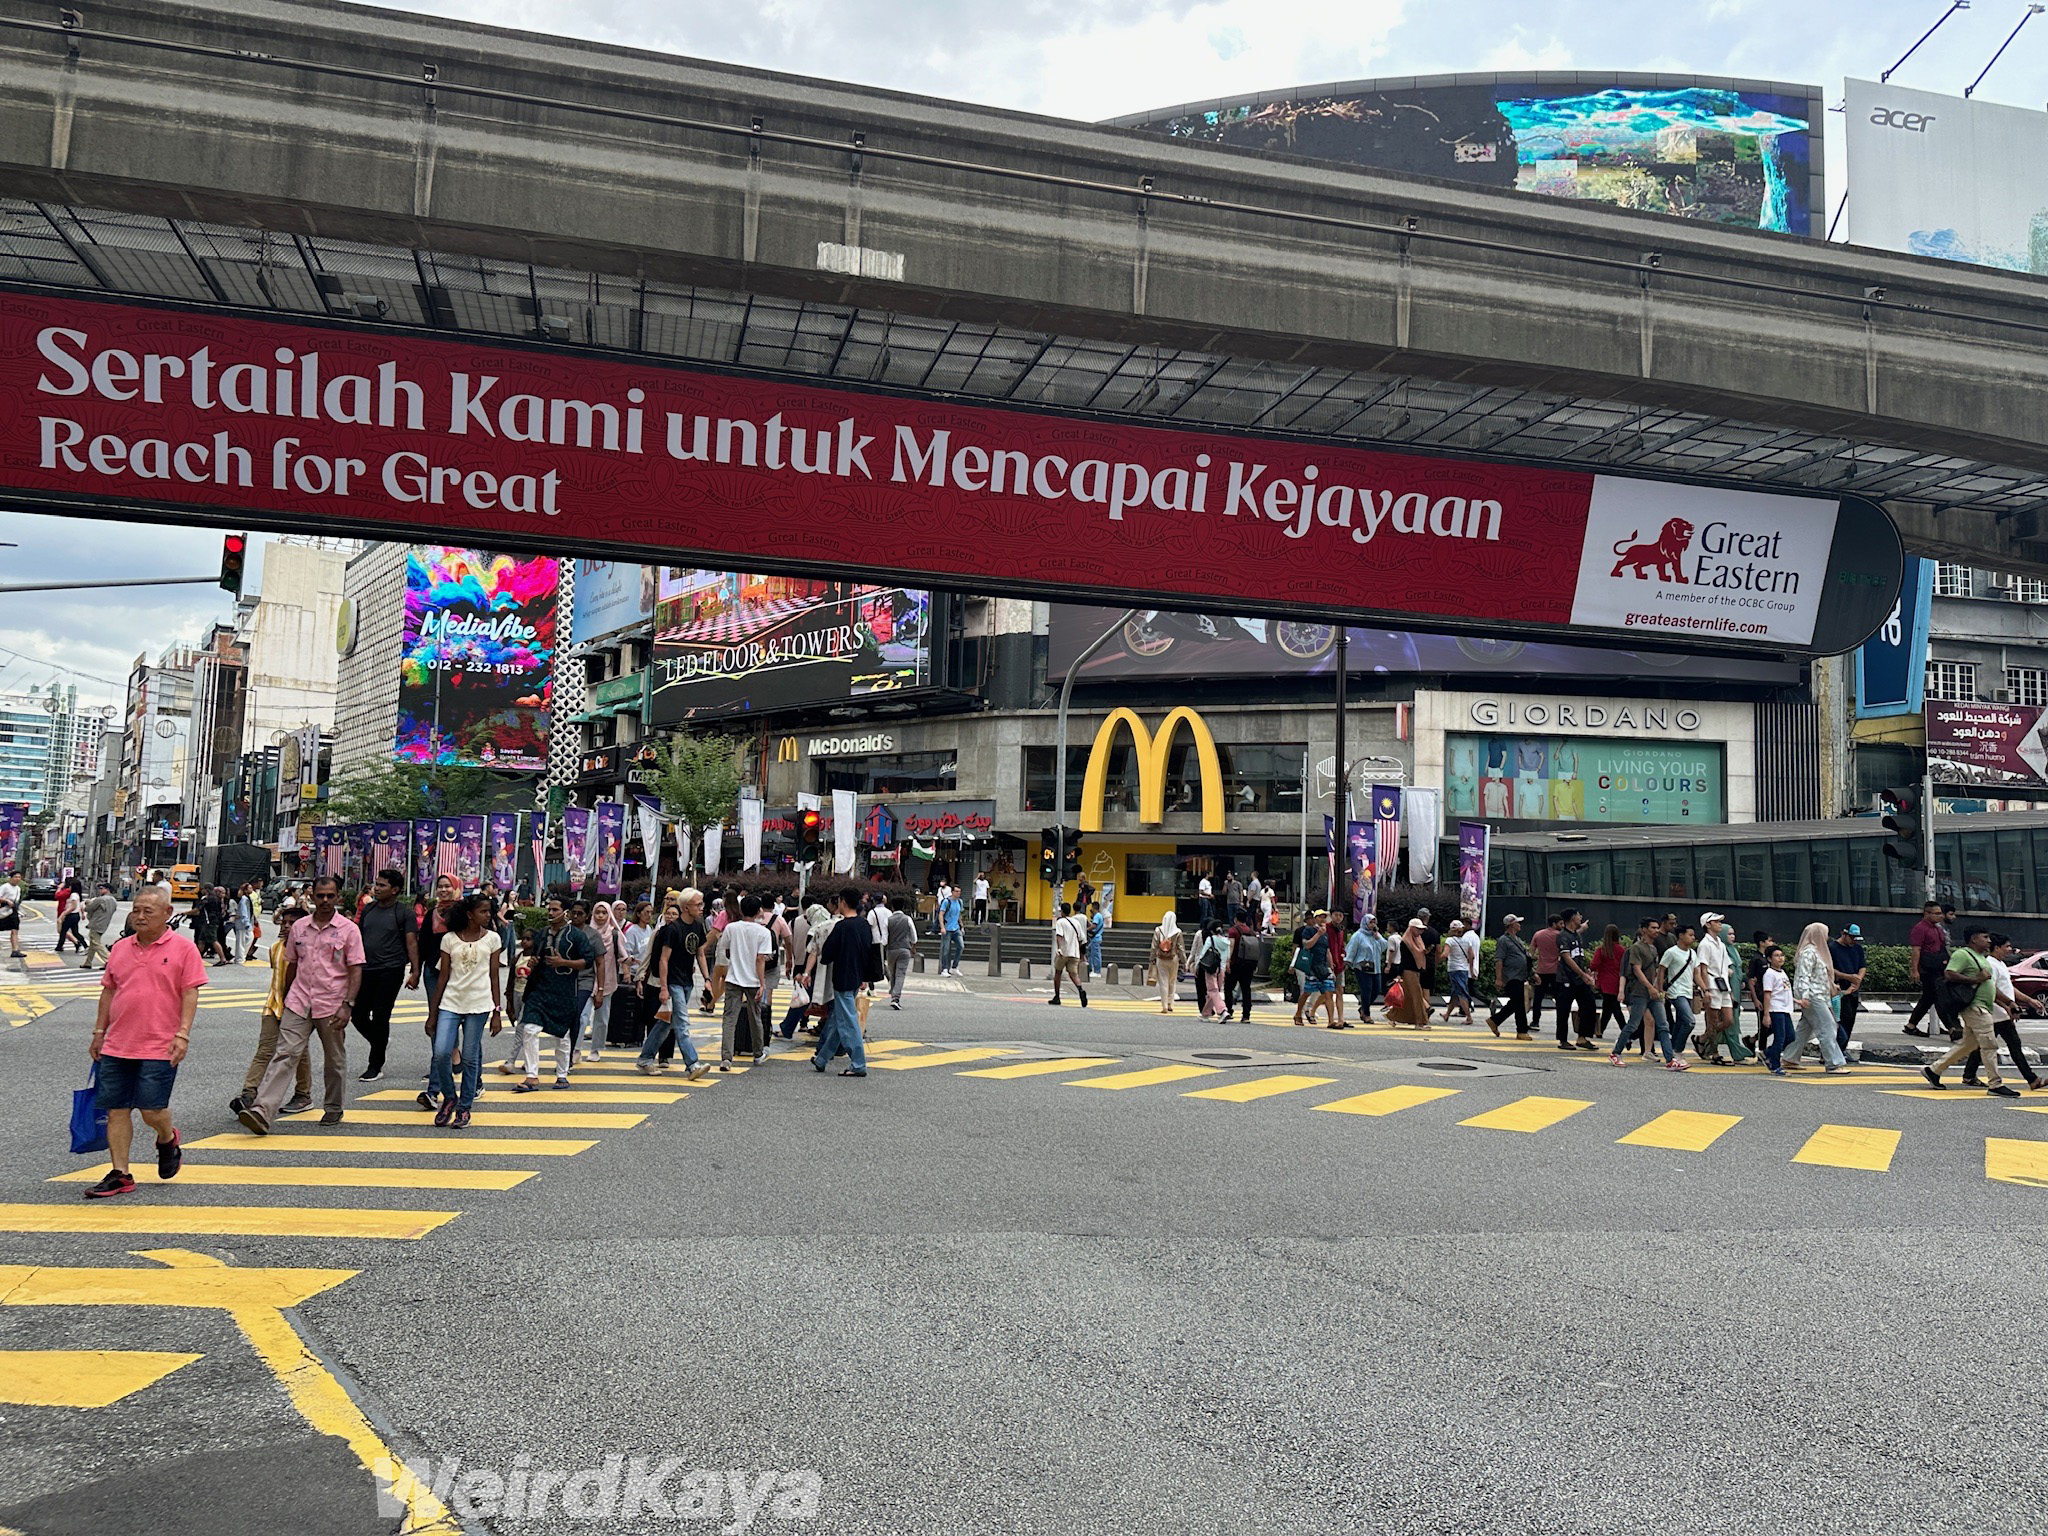 Bukit bintang_mcdonalds sign_malaysians_people_traffic